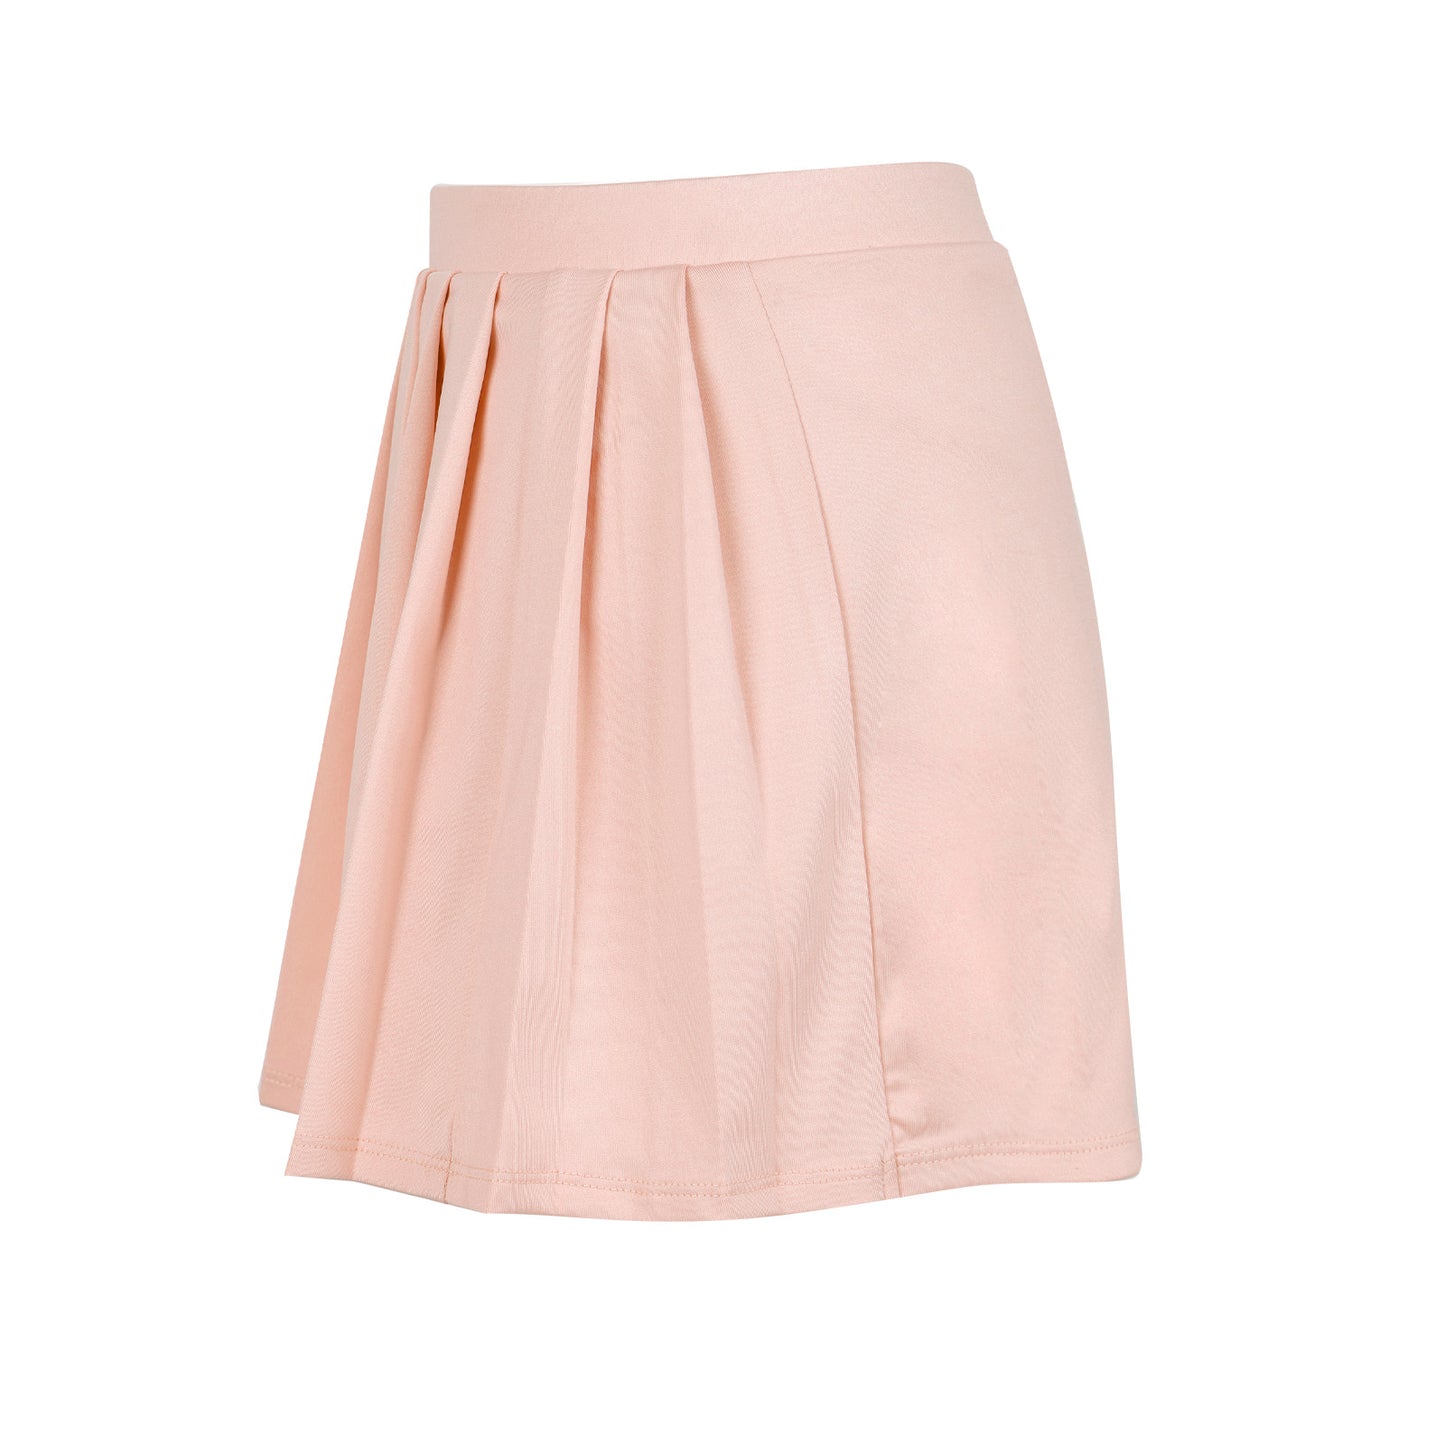 Carnival Lights Peach Wrap Pleat Skirt - New!